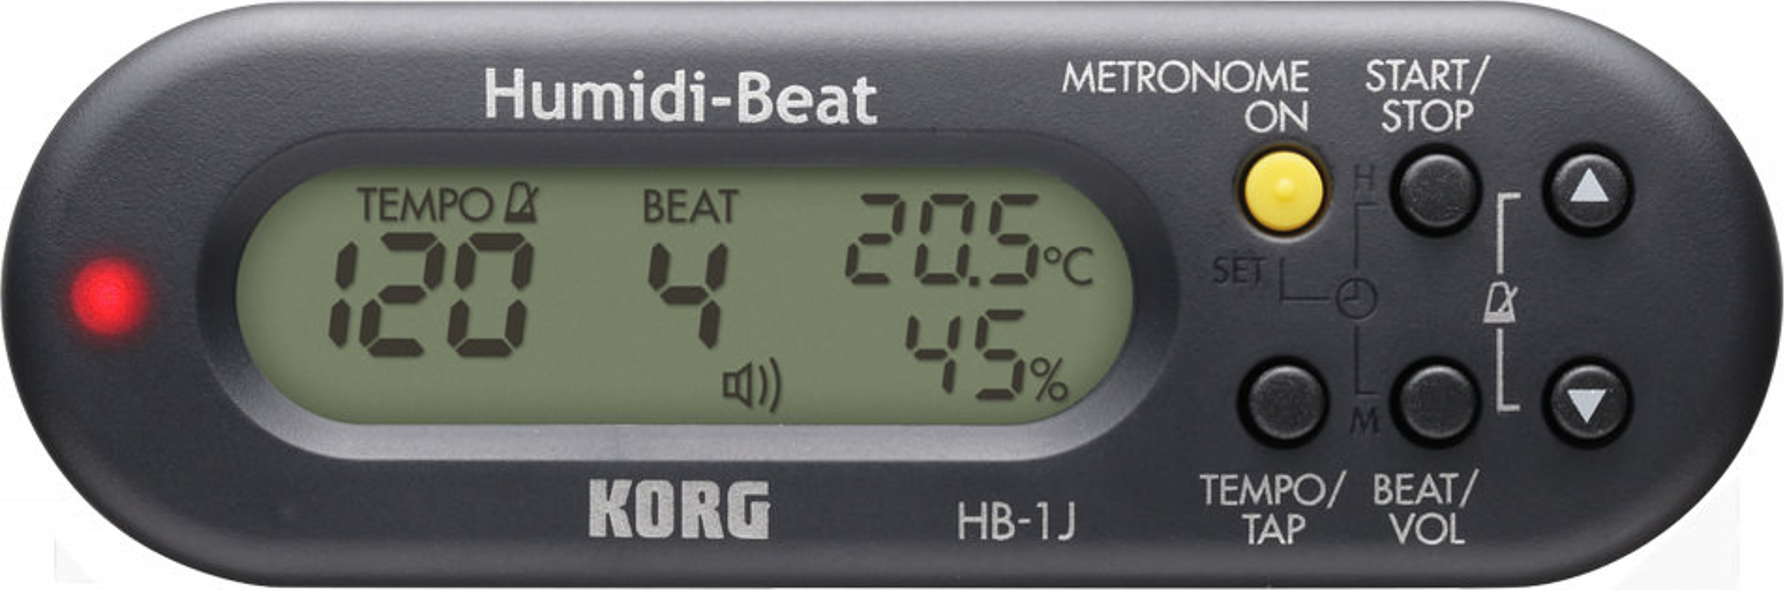 Korg Humidi-beat Metronome With Humidity Temperature Detector Black - Stimmgerät für Gitarre - Main picture